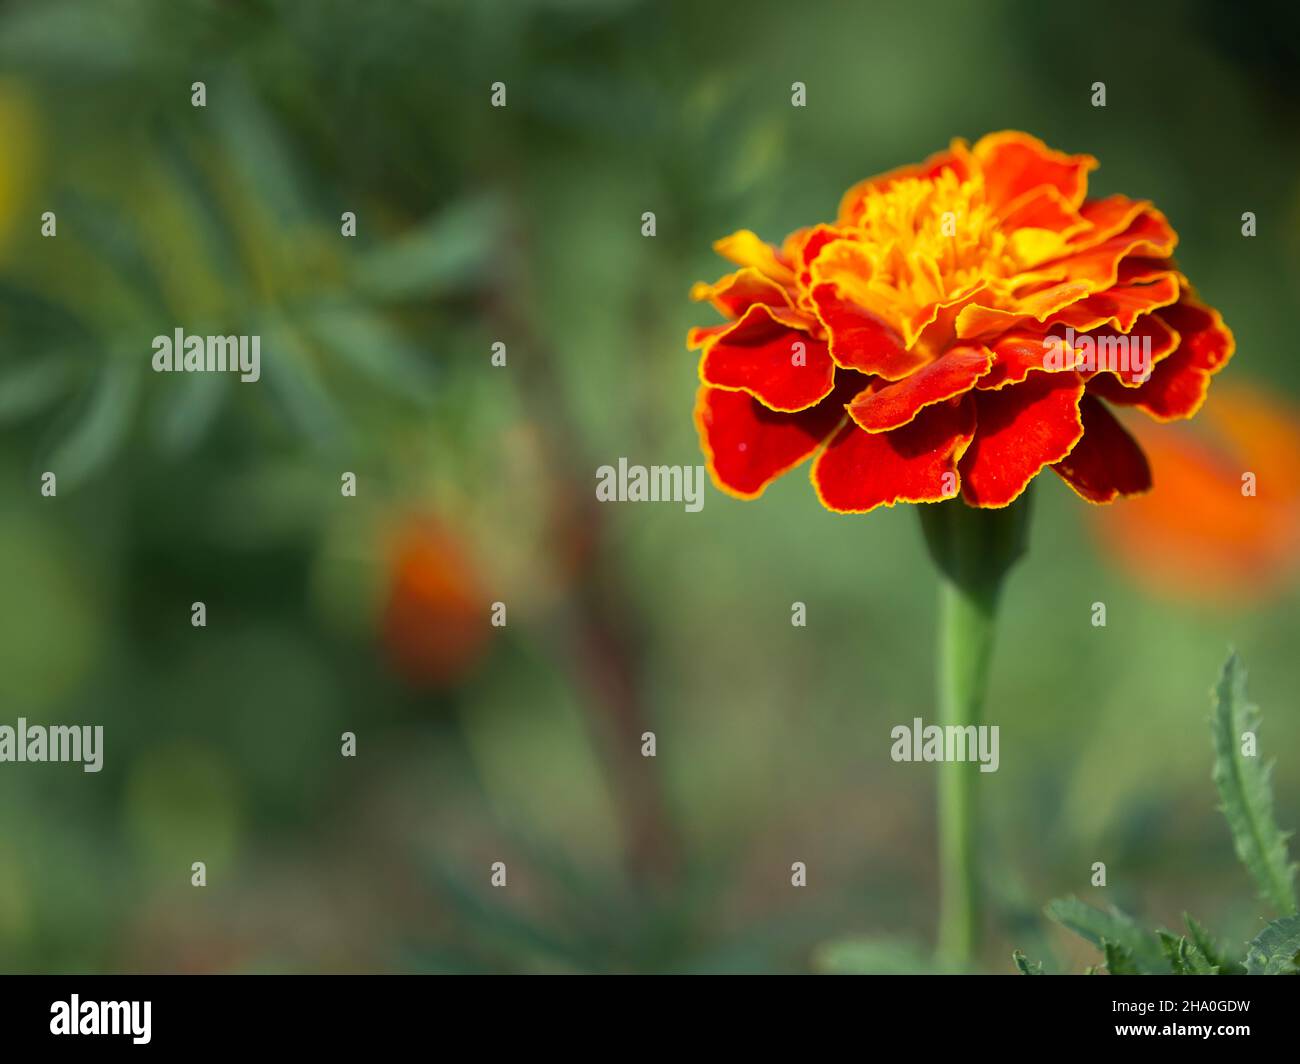 Marigold flower on a blurry background, macro photo. Stock Photo